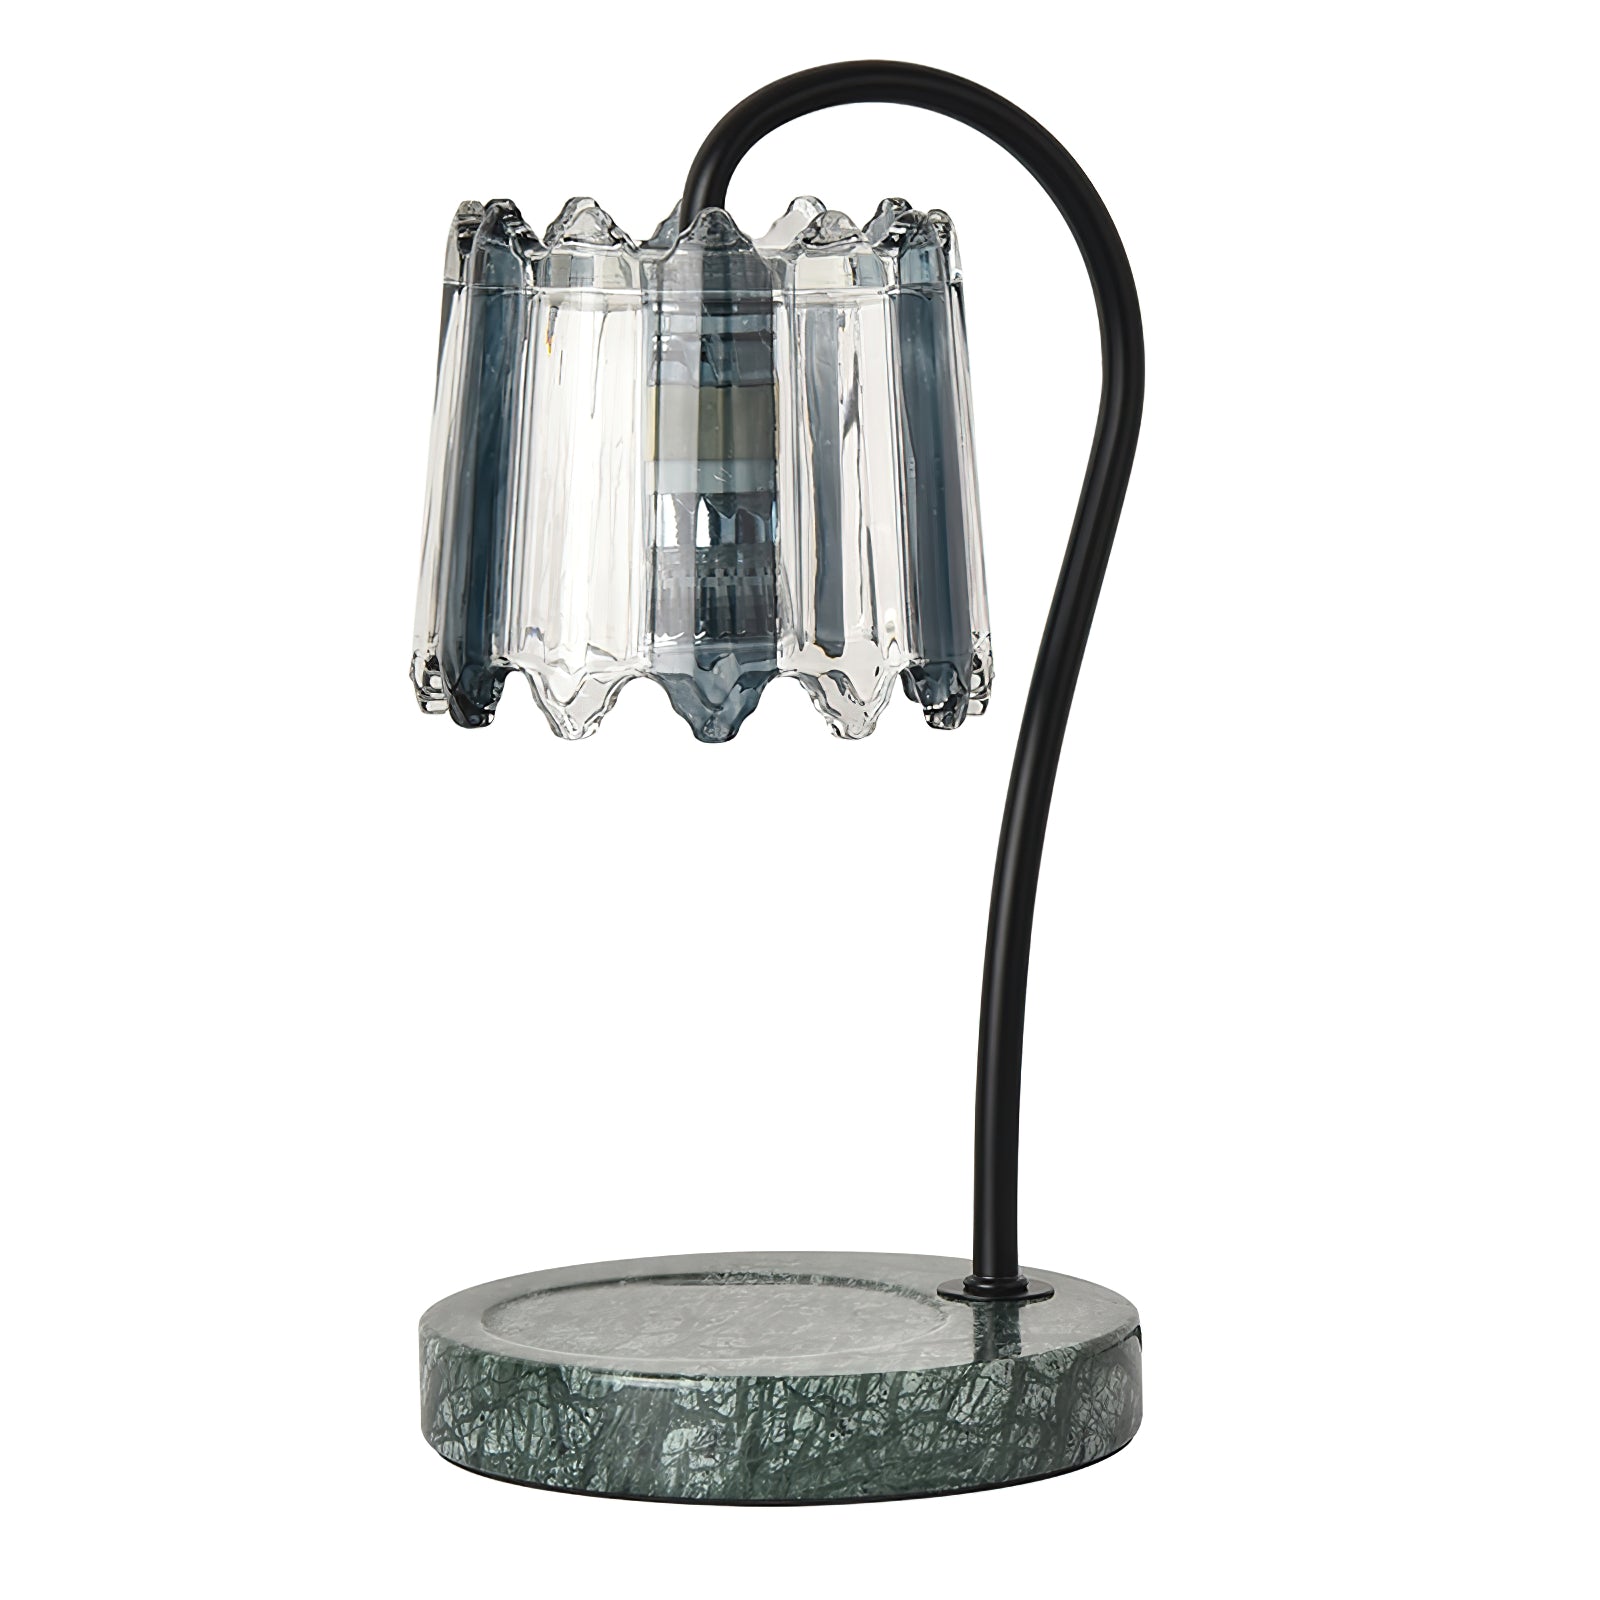 Kingsley Candle Warmer Lamp